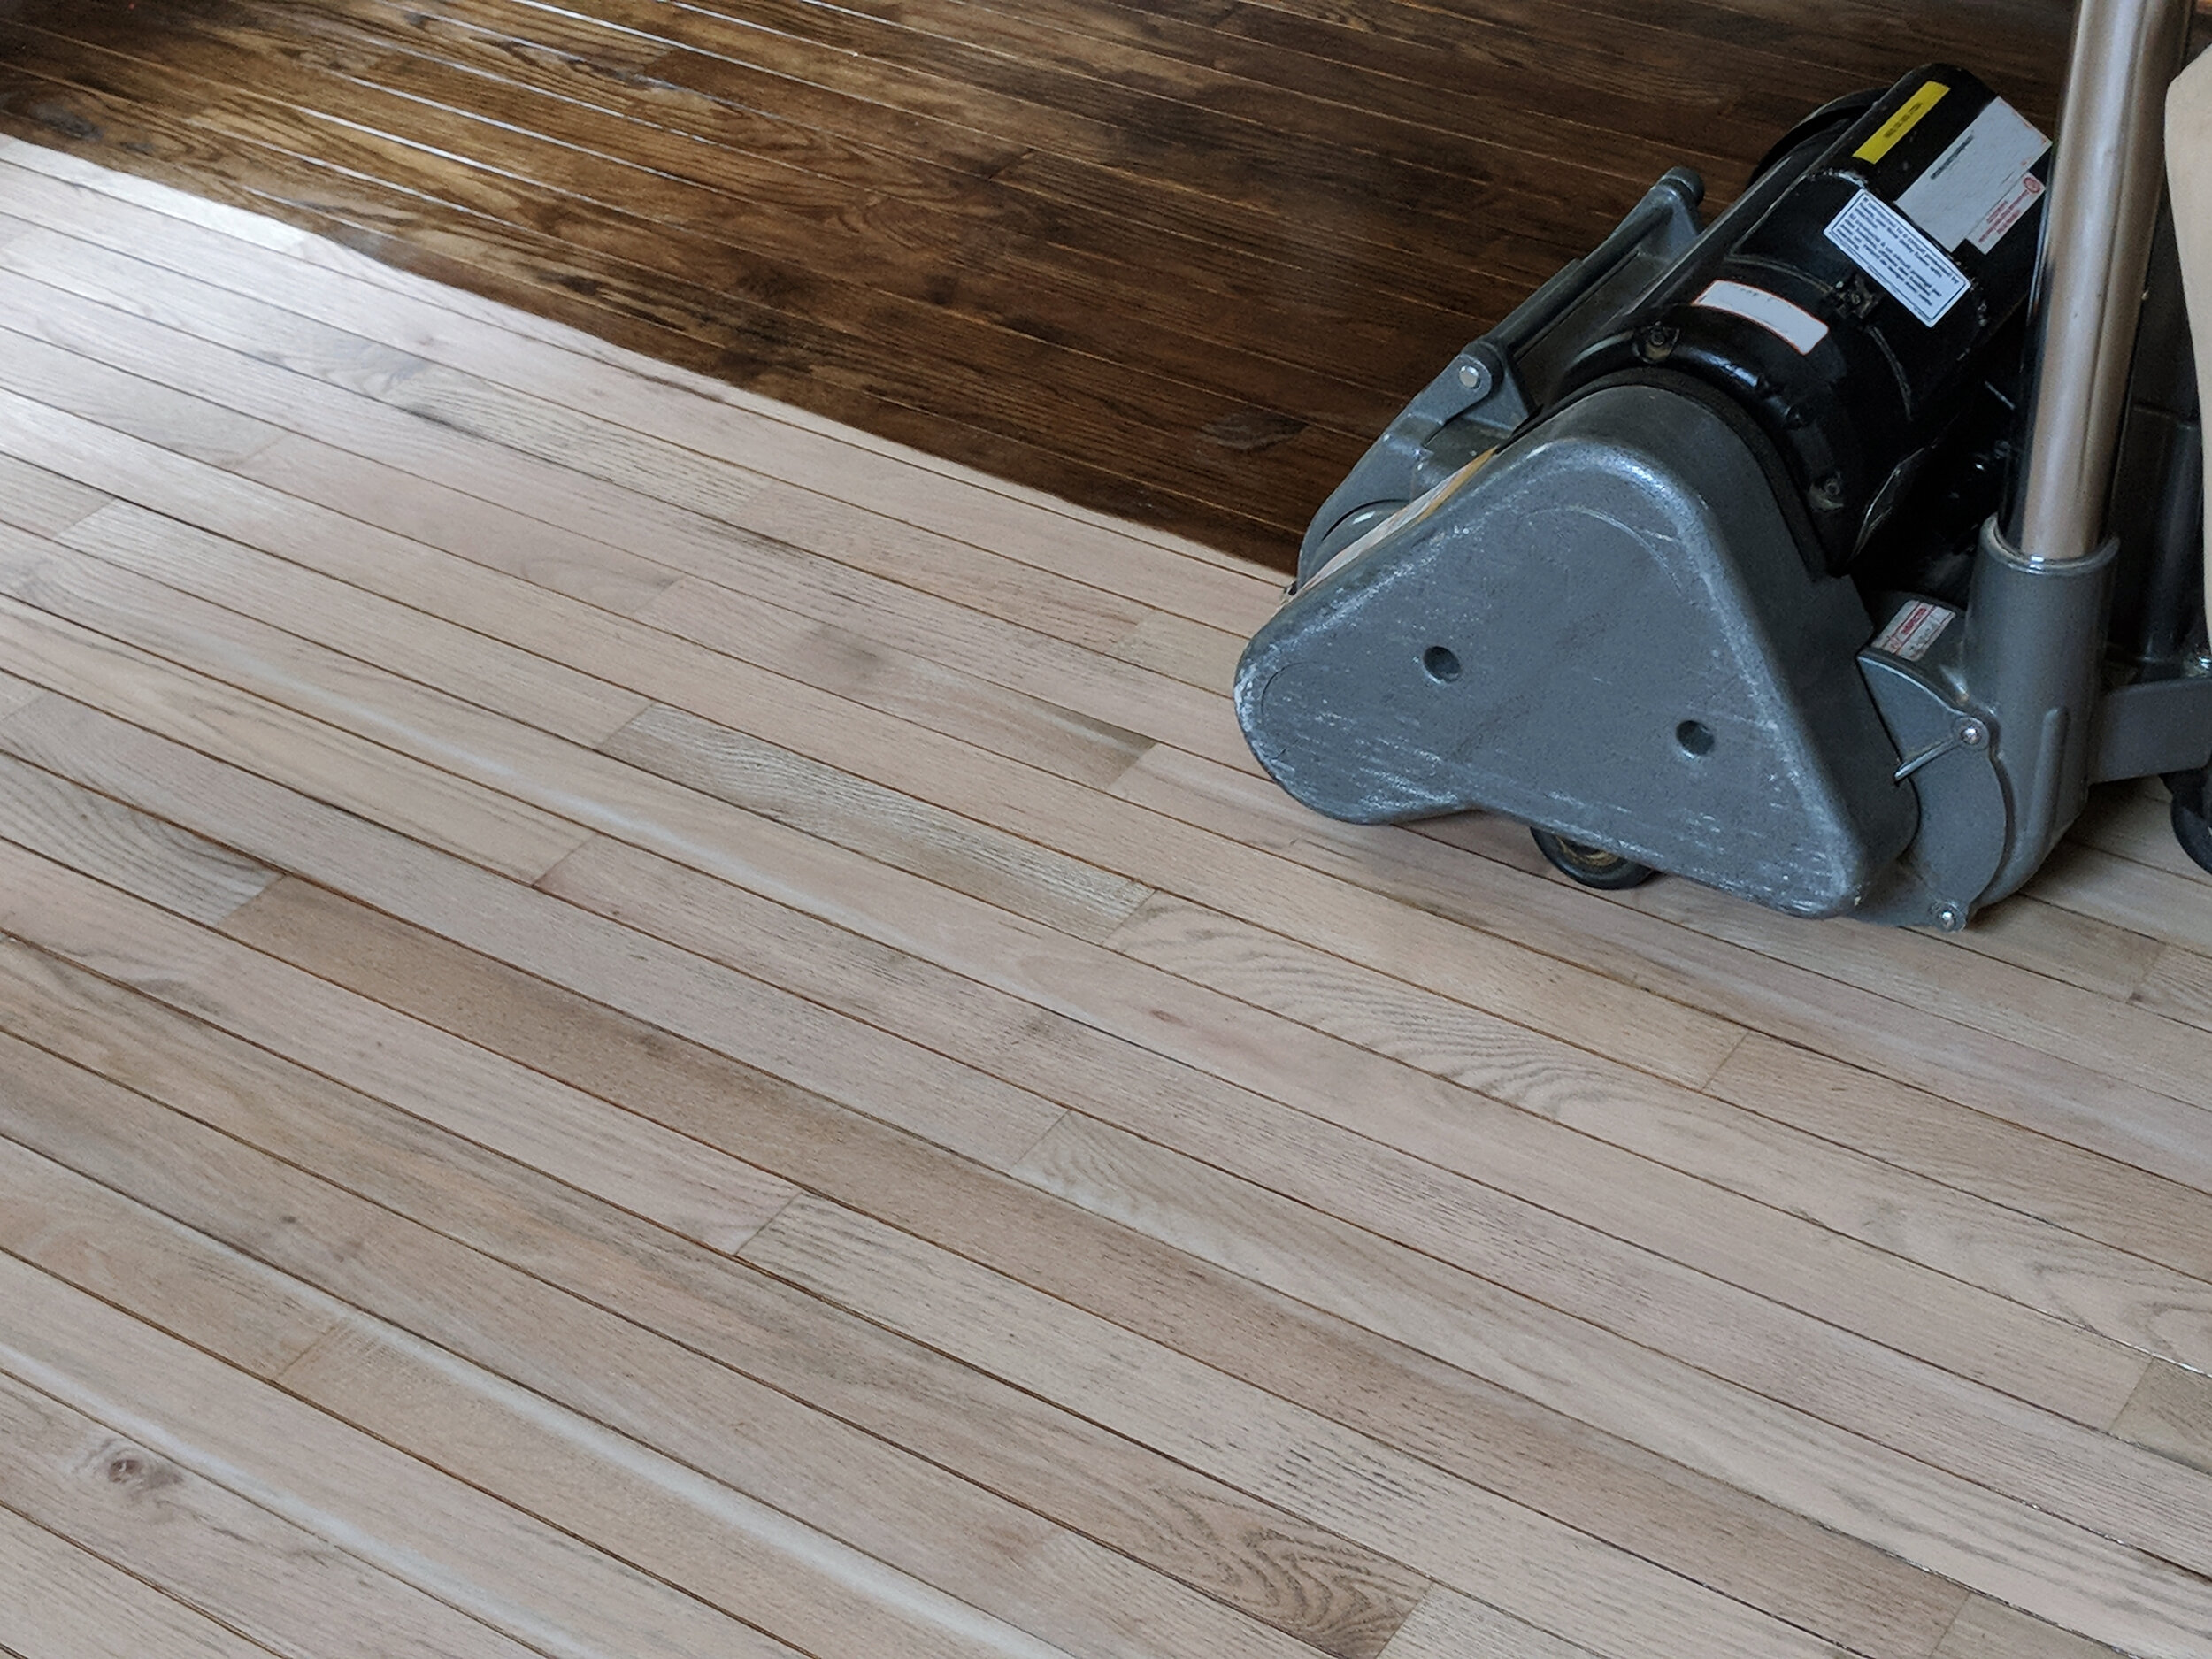 Hardwood Floors Be Refinished, How Often Do Hardwood Floors Need To Be Refinished